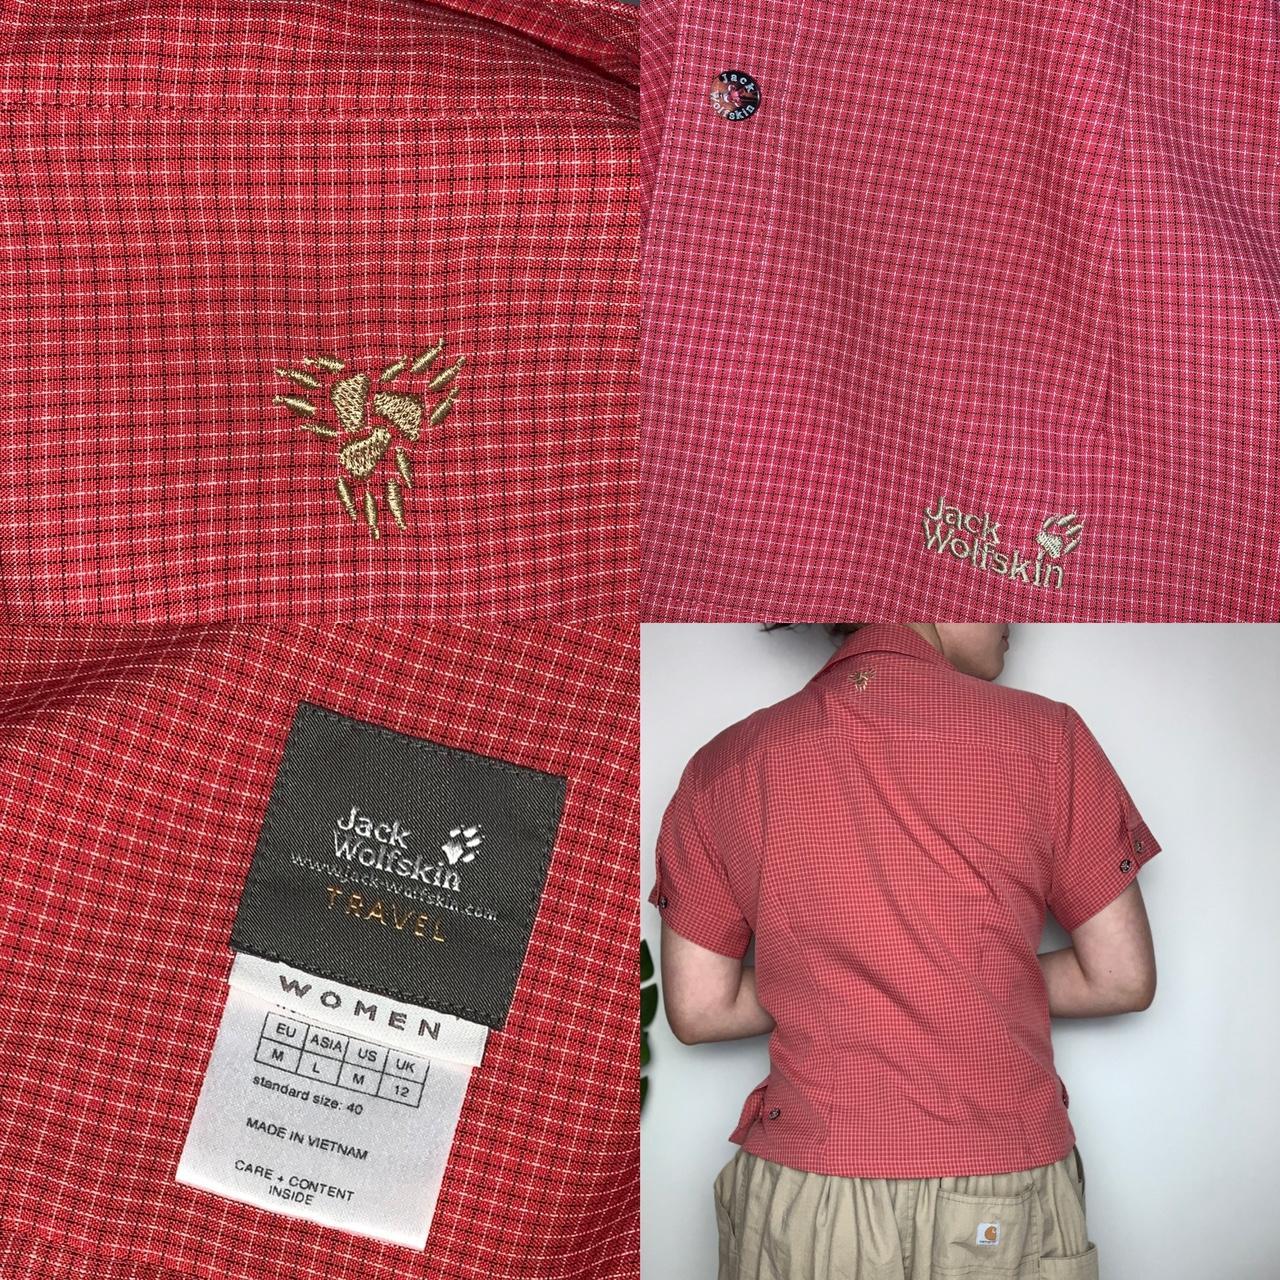 HOLIDAY HEATWAVE 🌴 Jack Wolfskin vintage red checked button up shirt